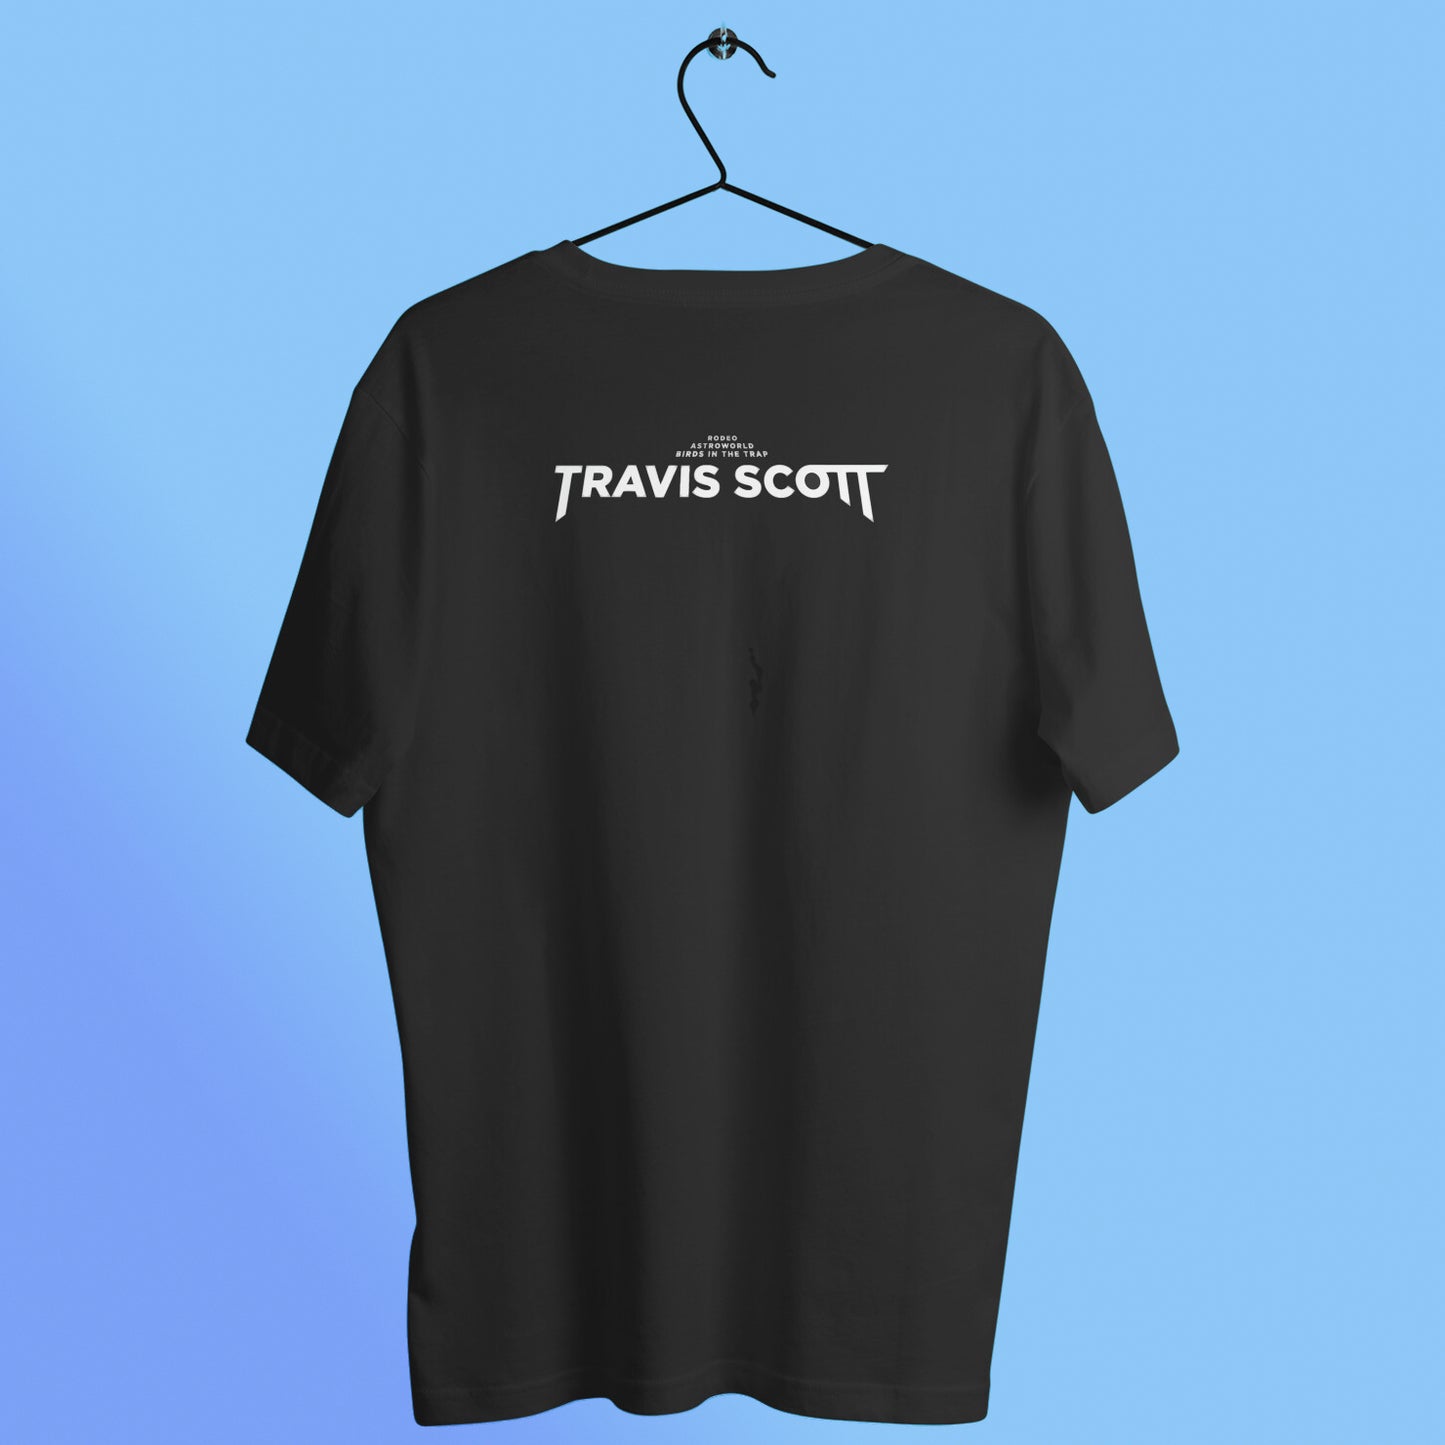 Travis Scott In the highest room T-shirt